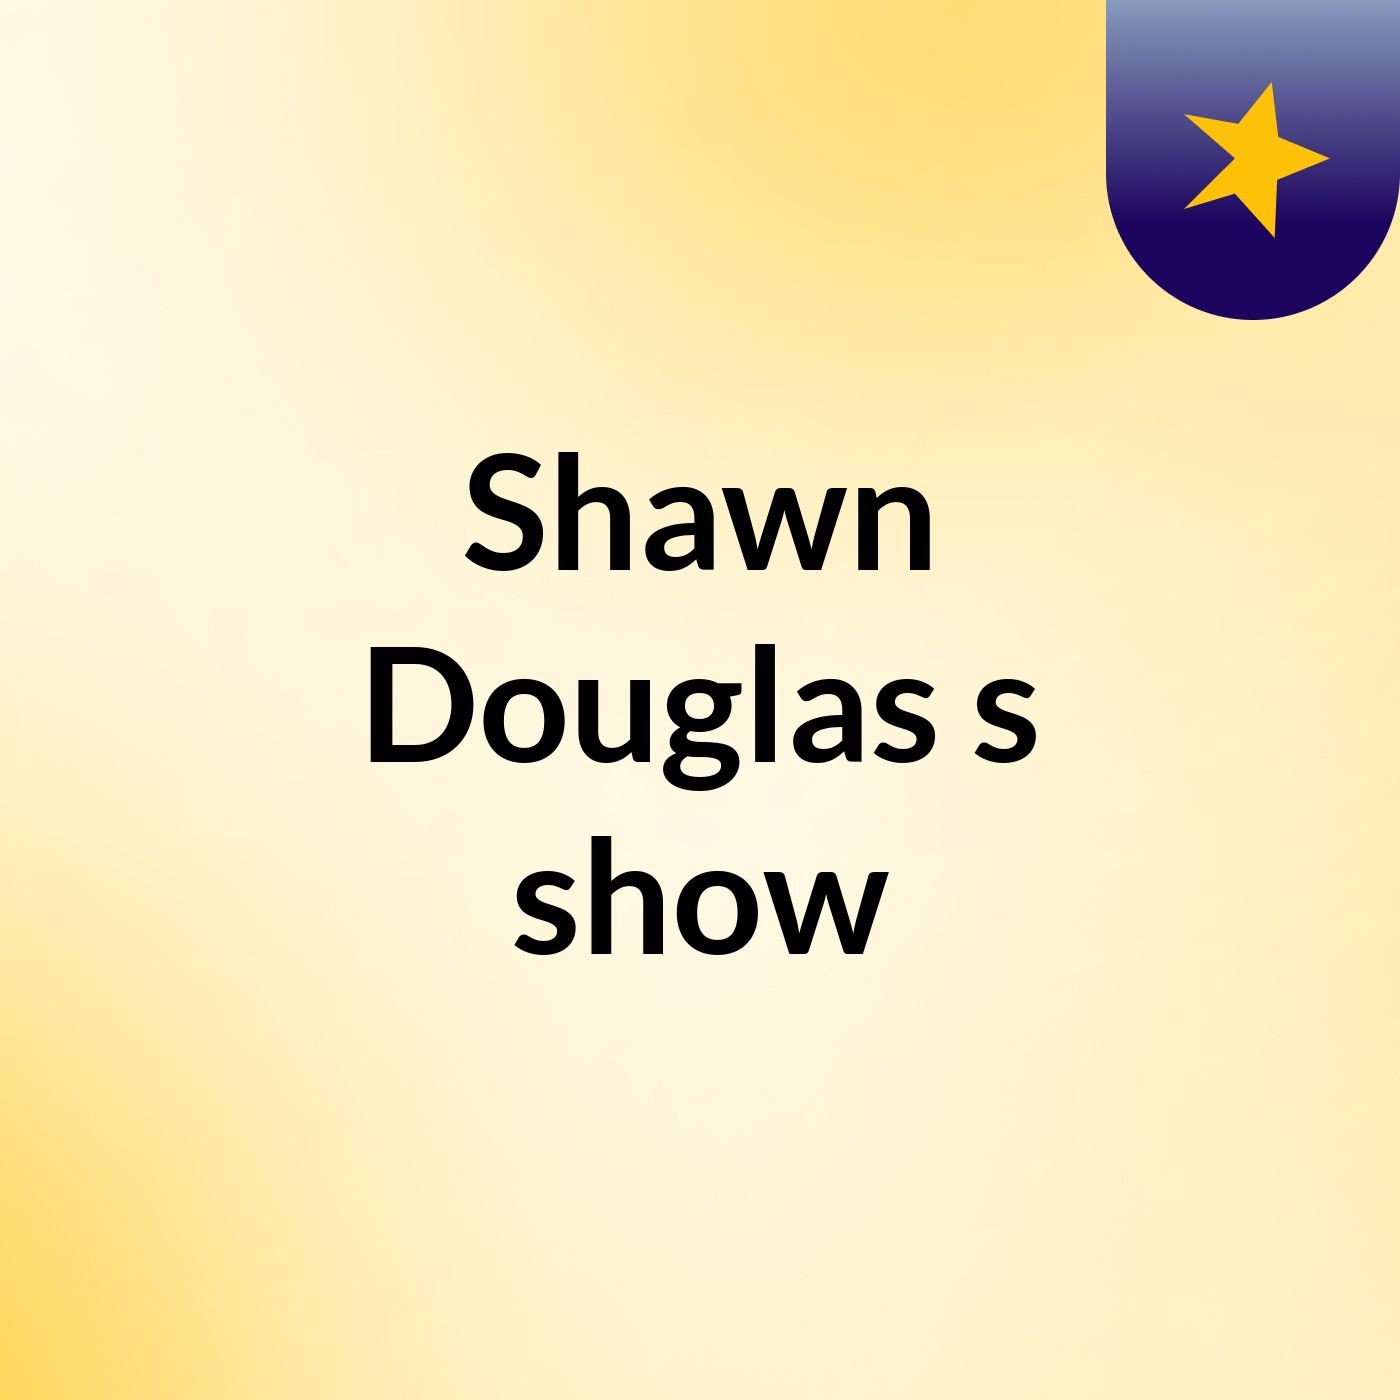 Shawn Douglas's show